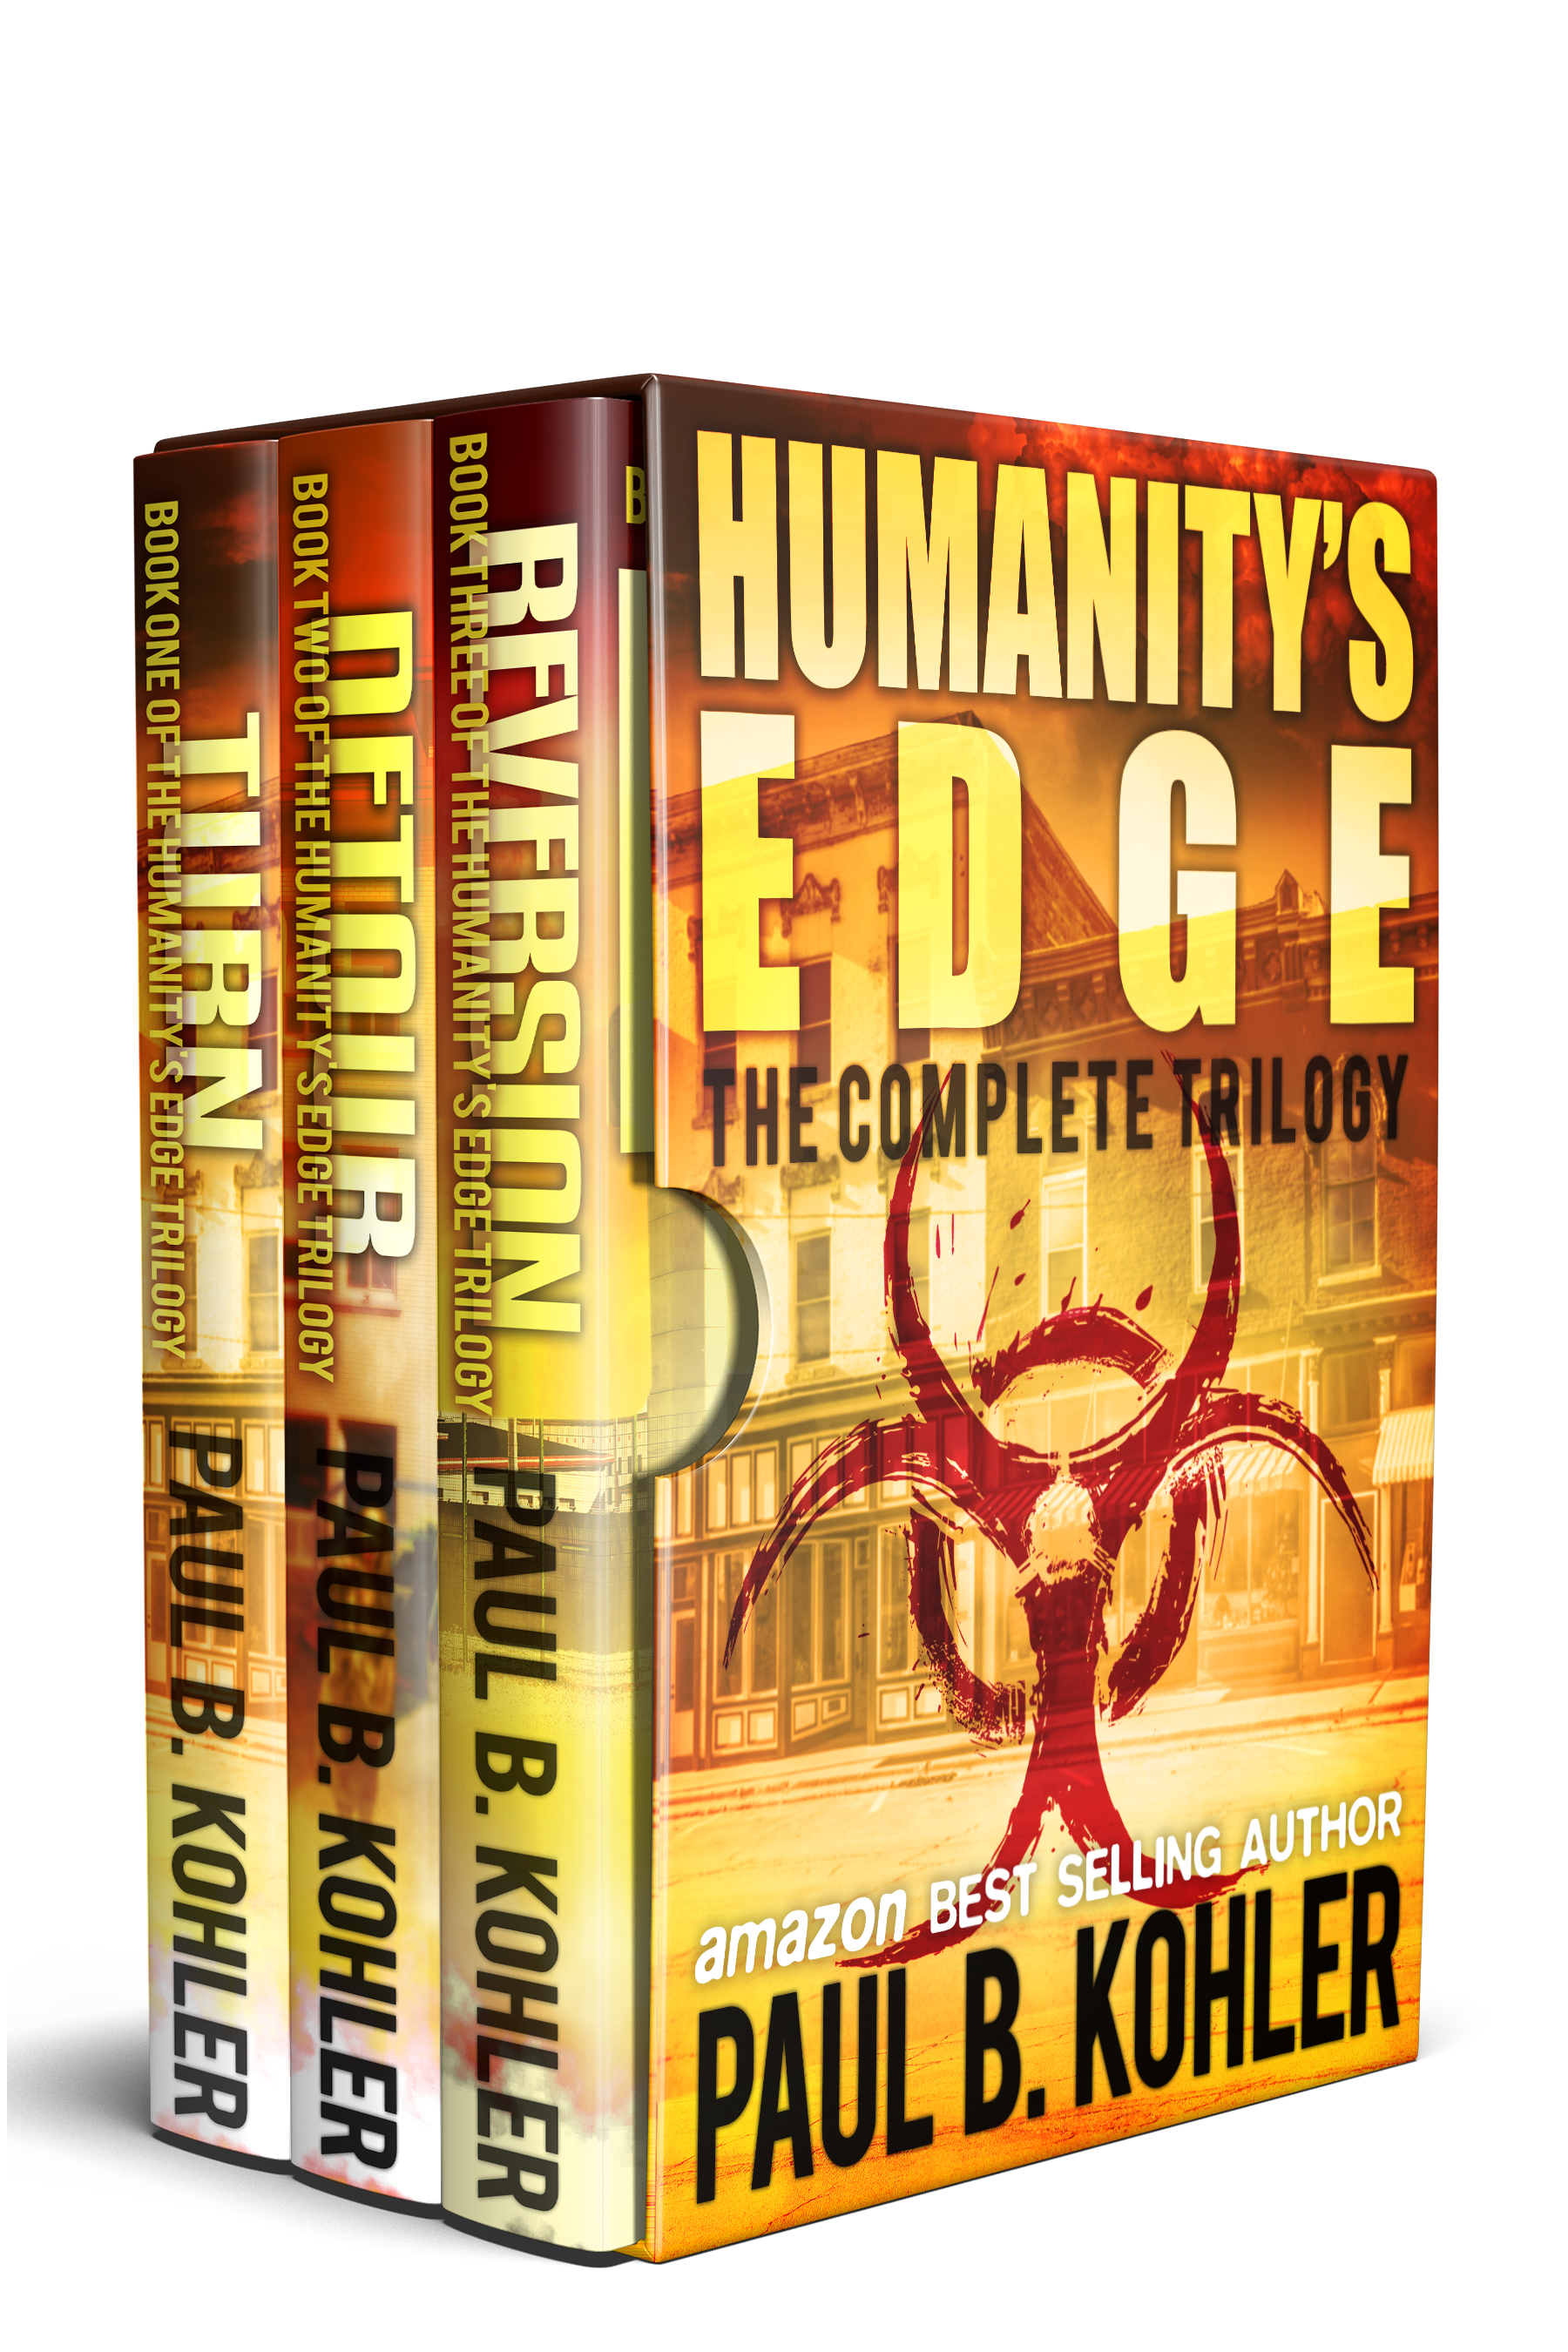 zombies, humanity's edge, horror, sci-fi, genetic engineering, nanites